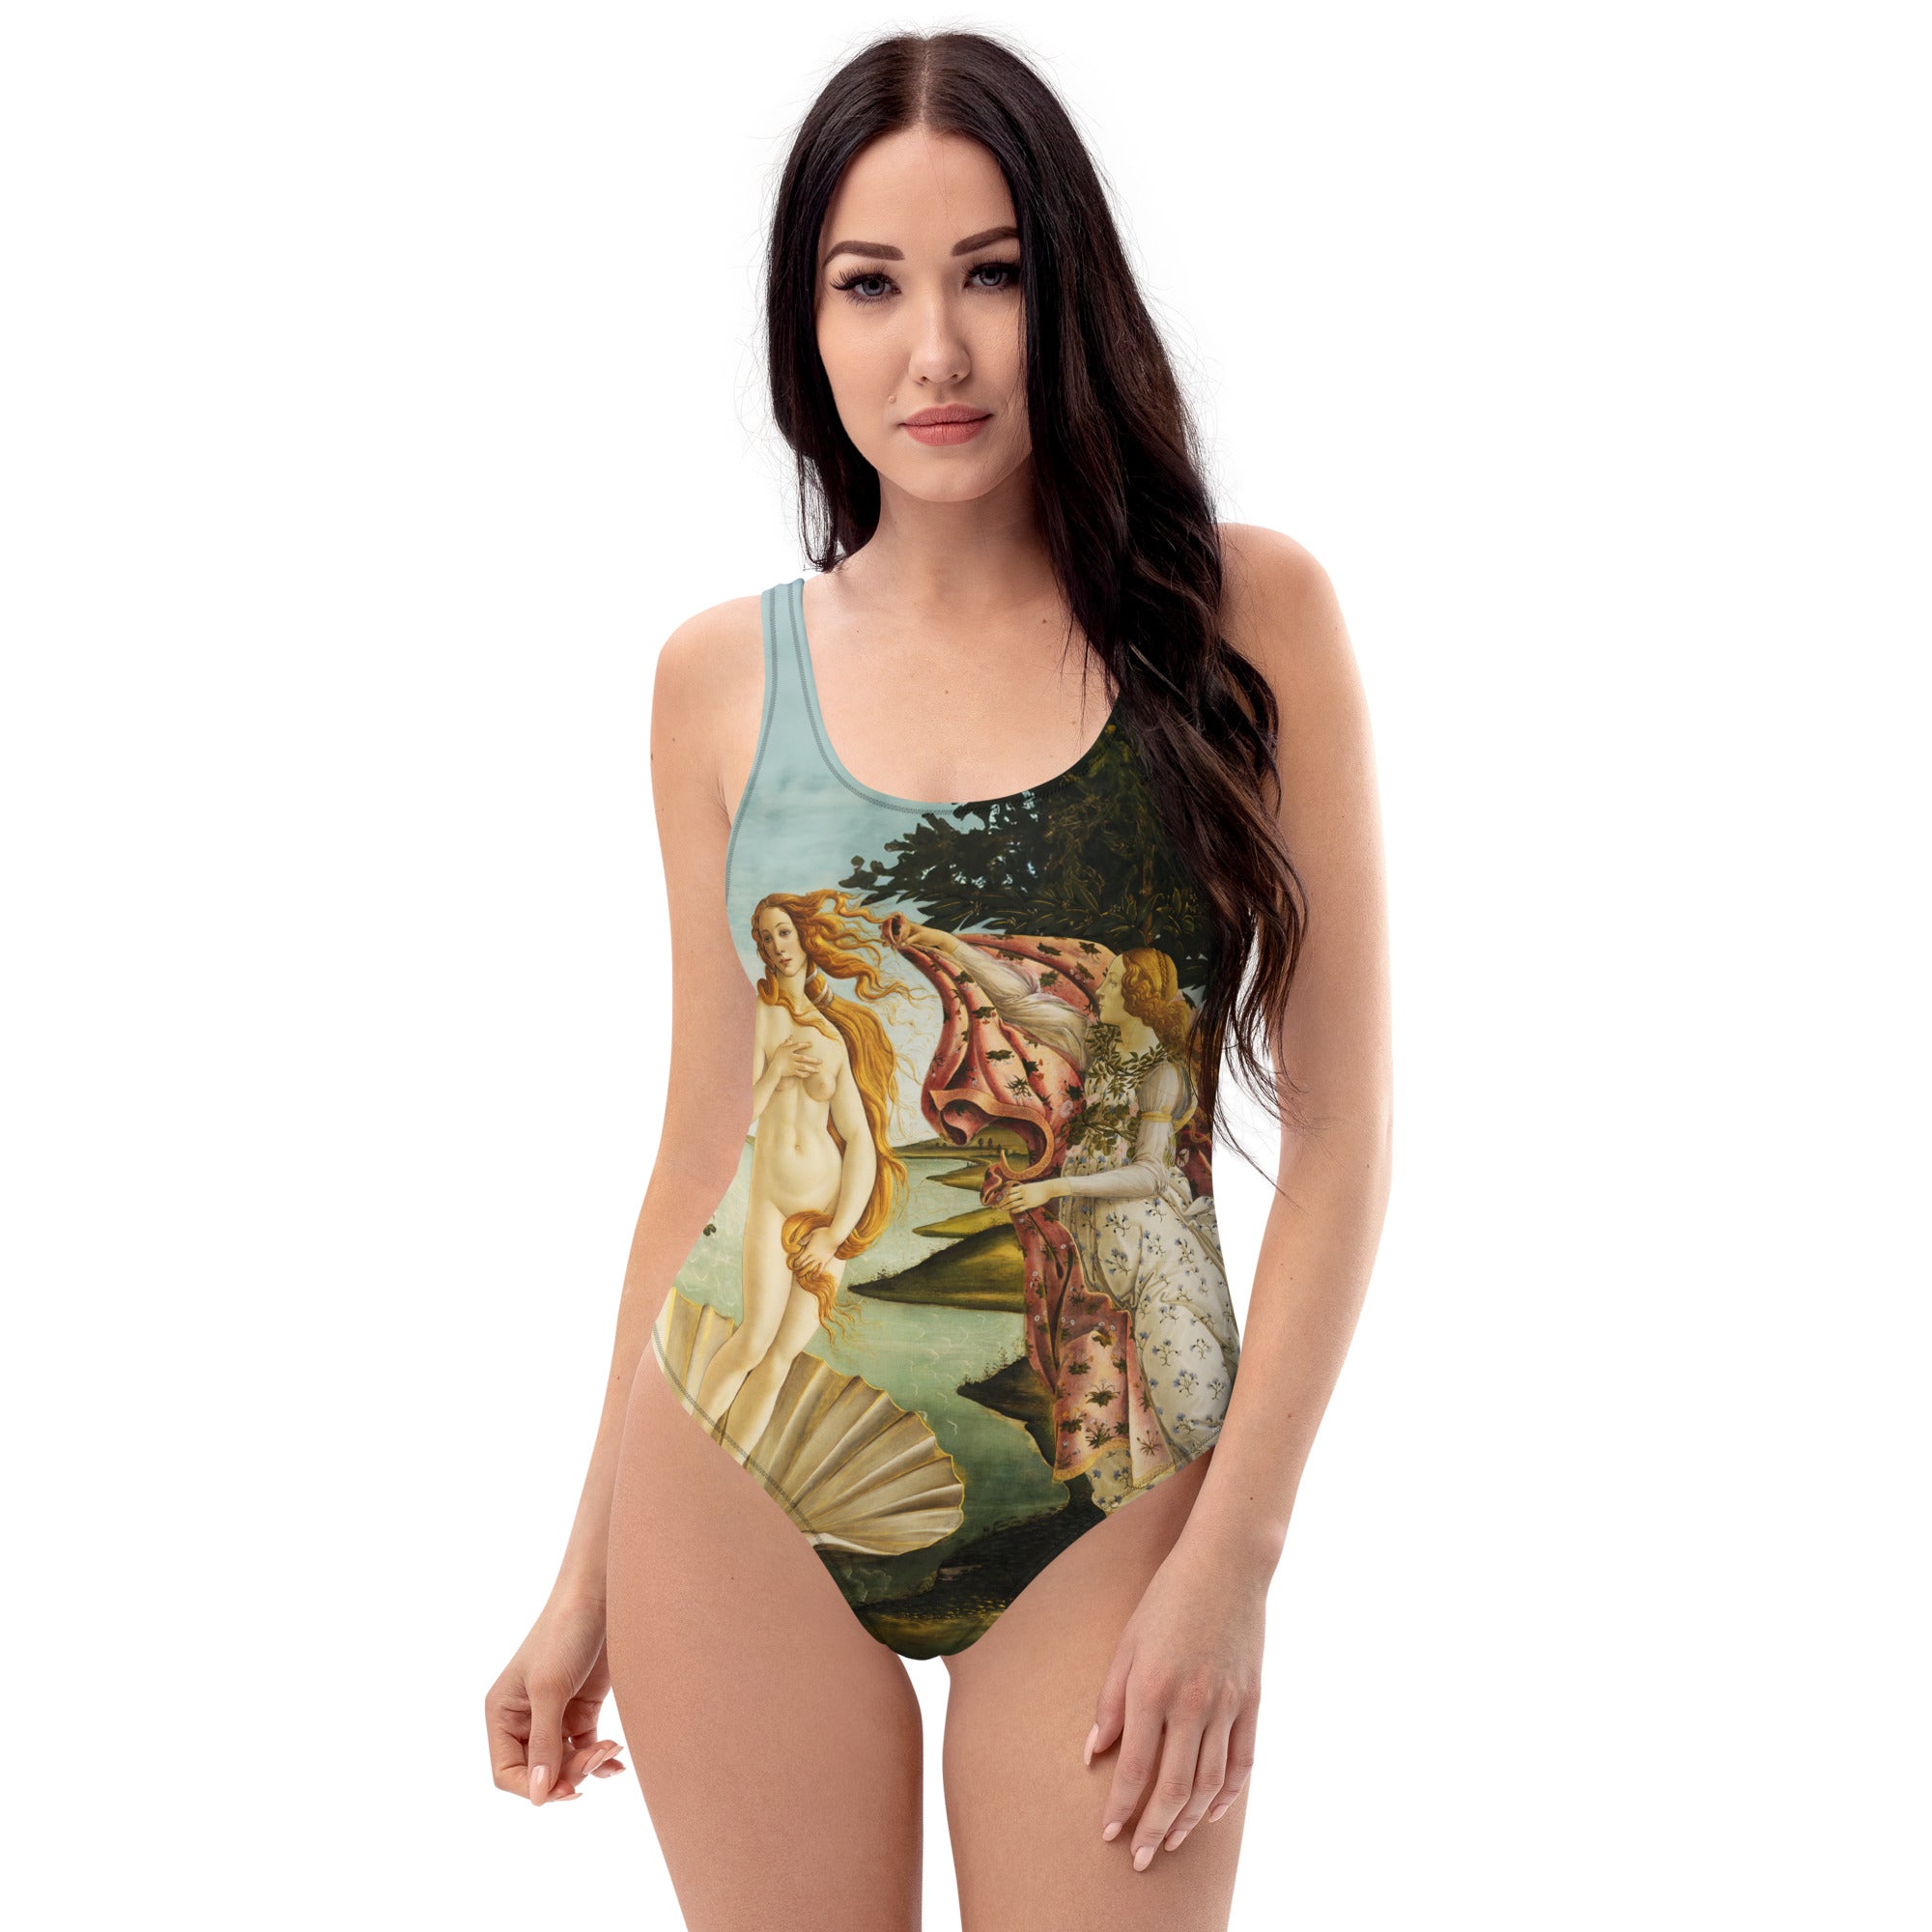 Sandro Botticelli 'The Birth of Venus' Famous Painting Swimsuit | Premium Art One Piece Swimsuit